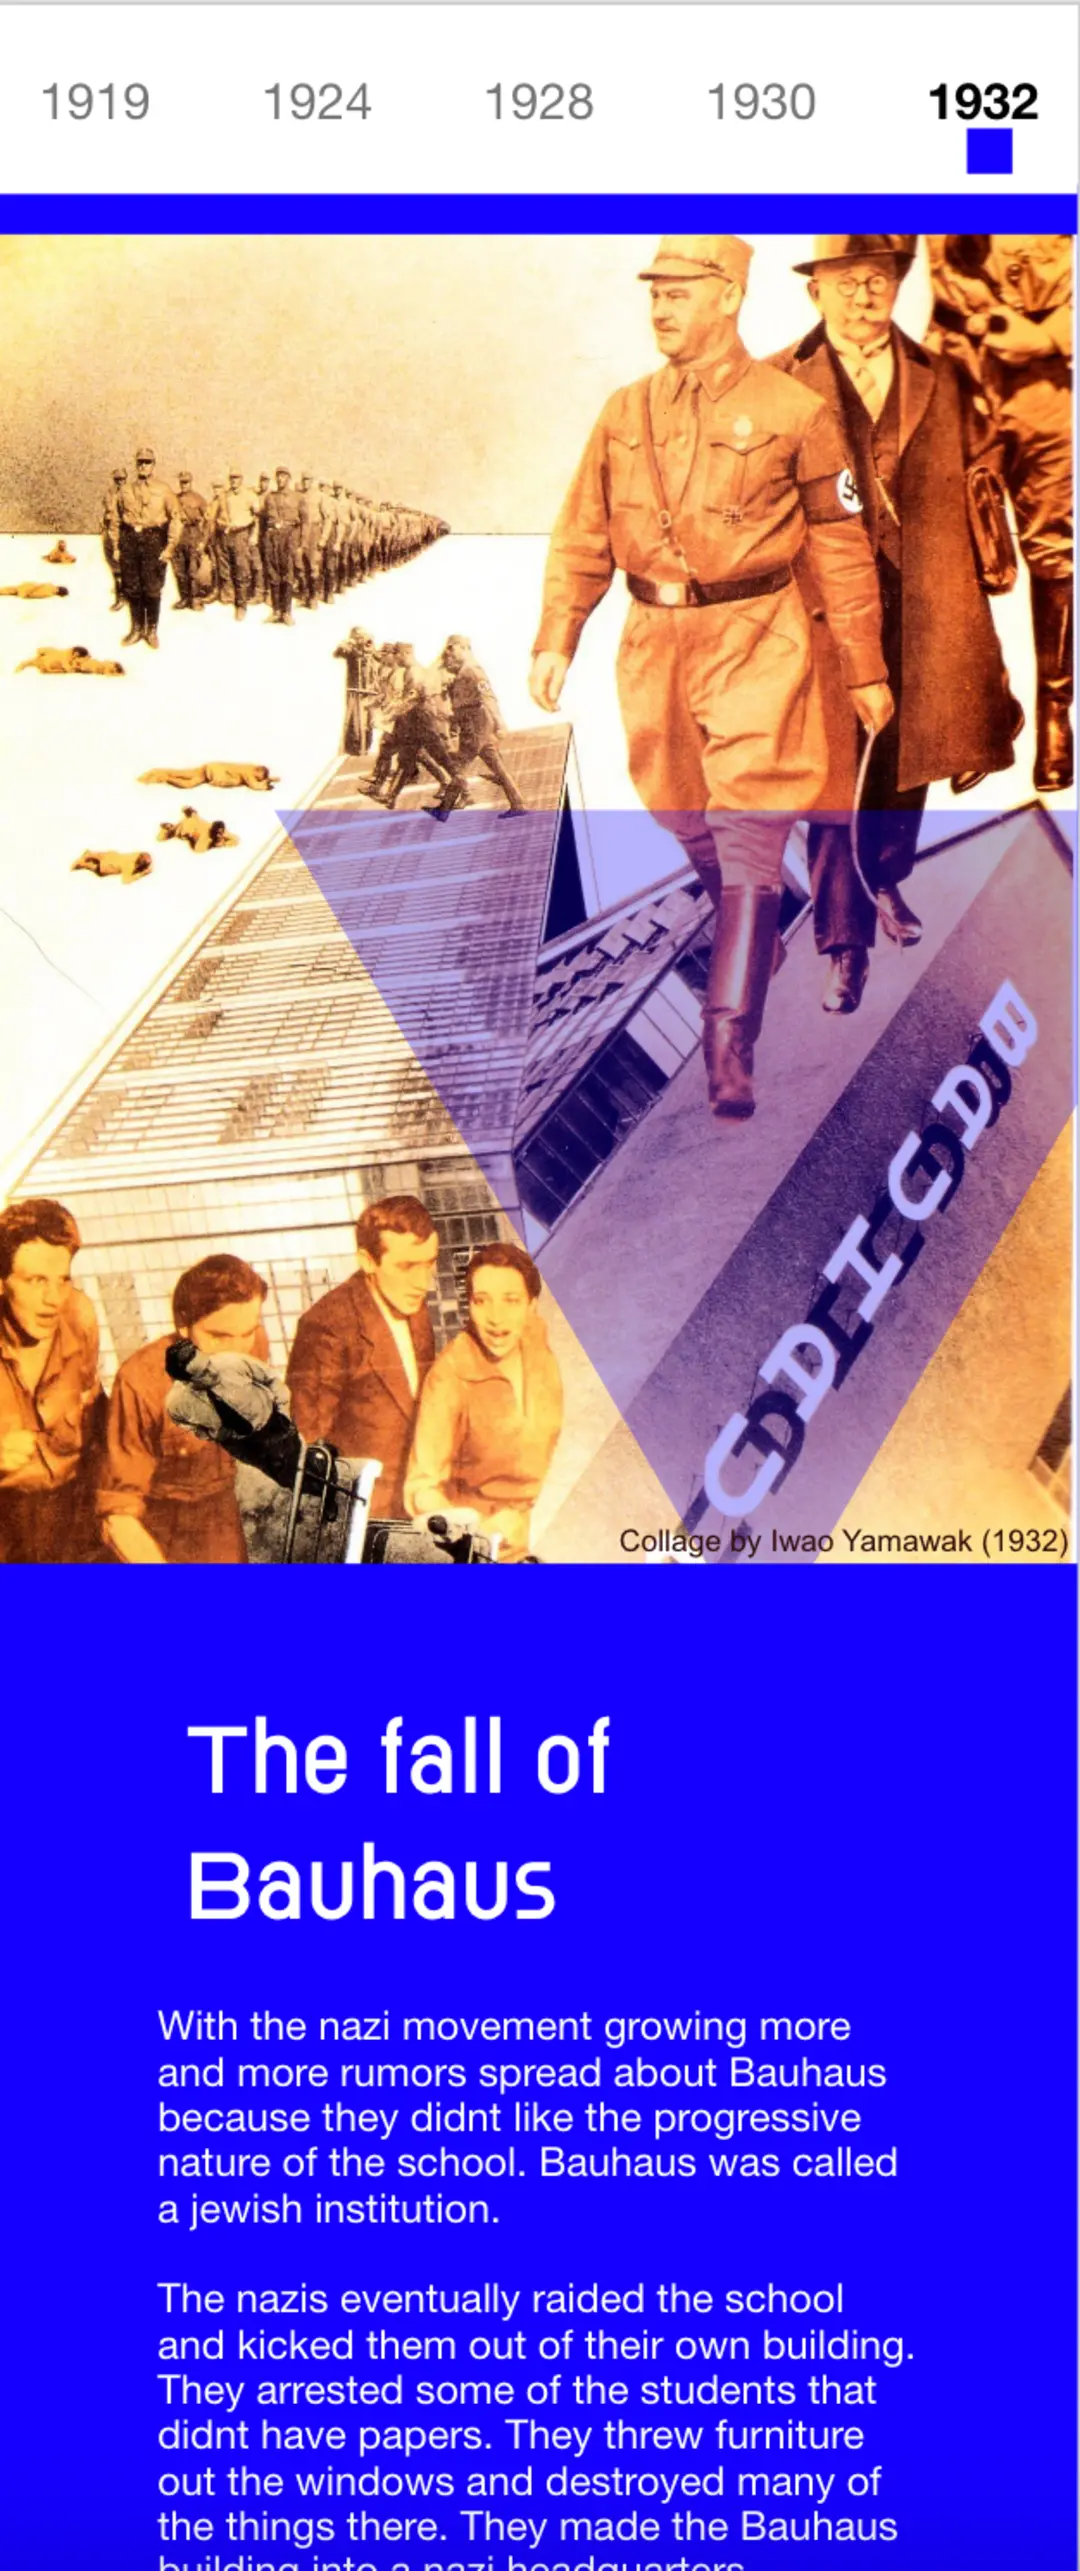 The fall of Bauhaus